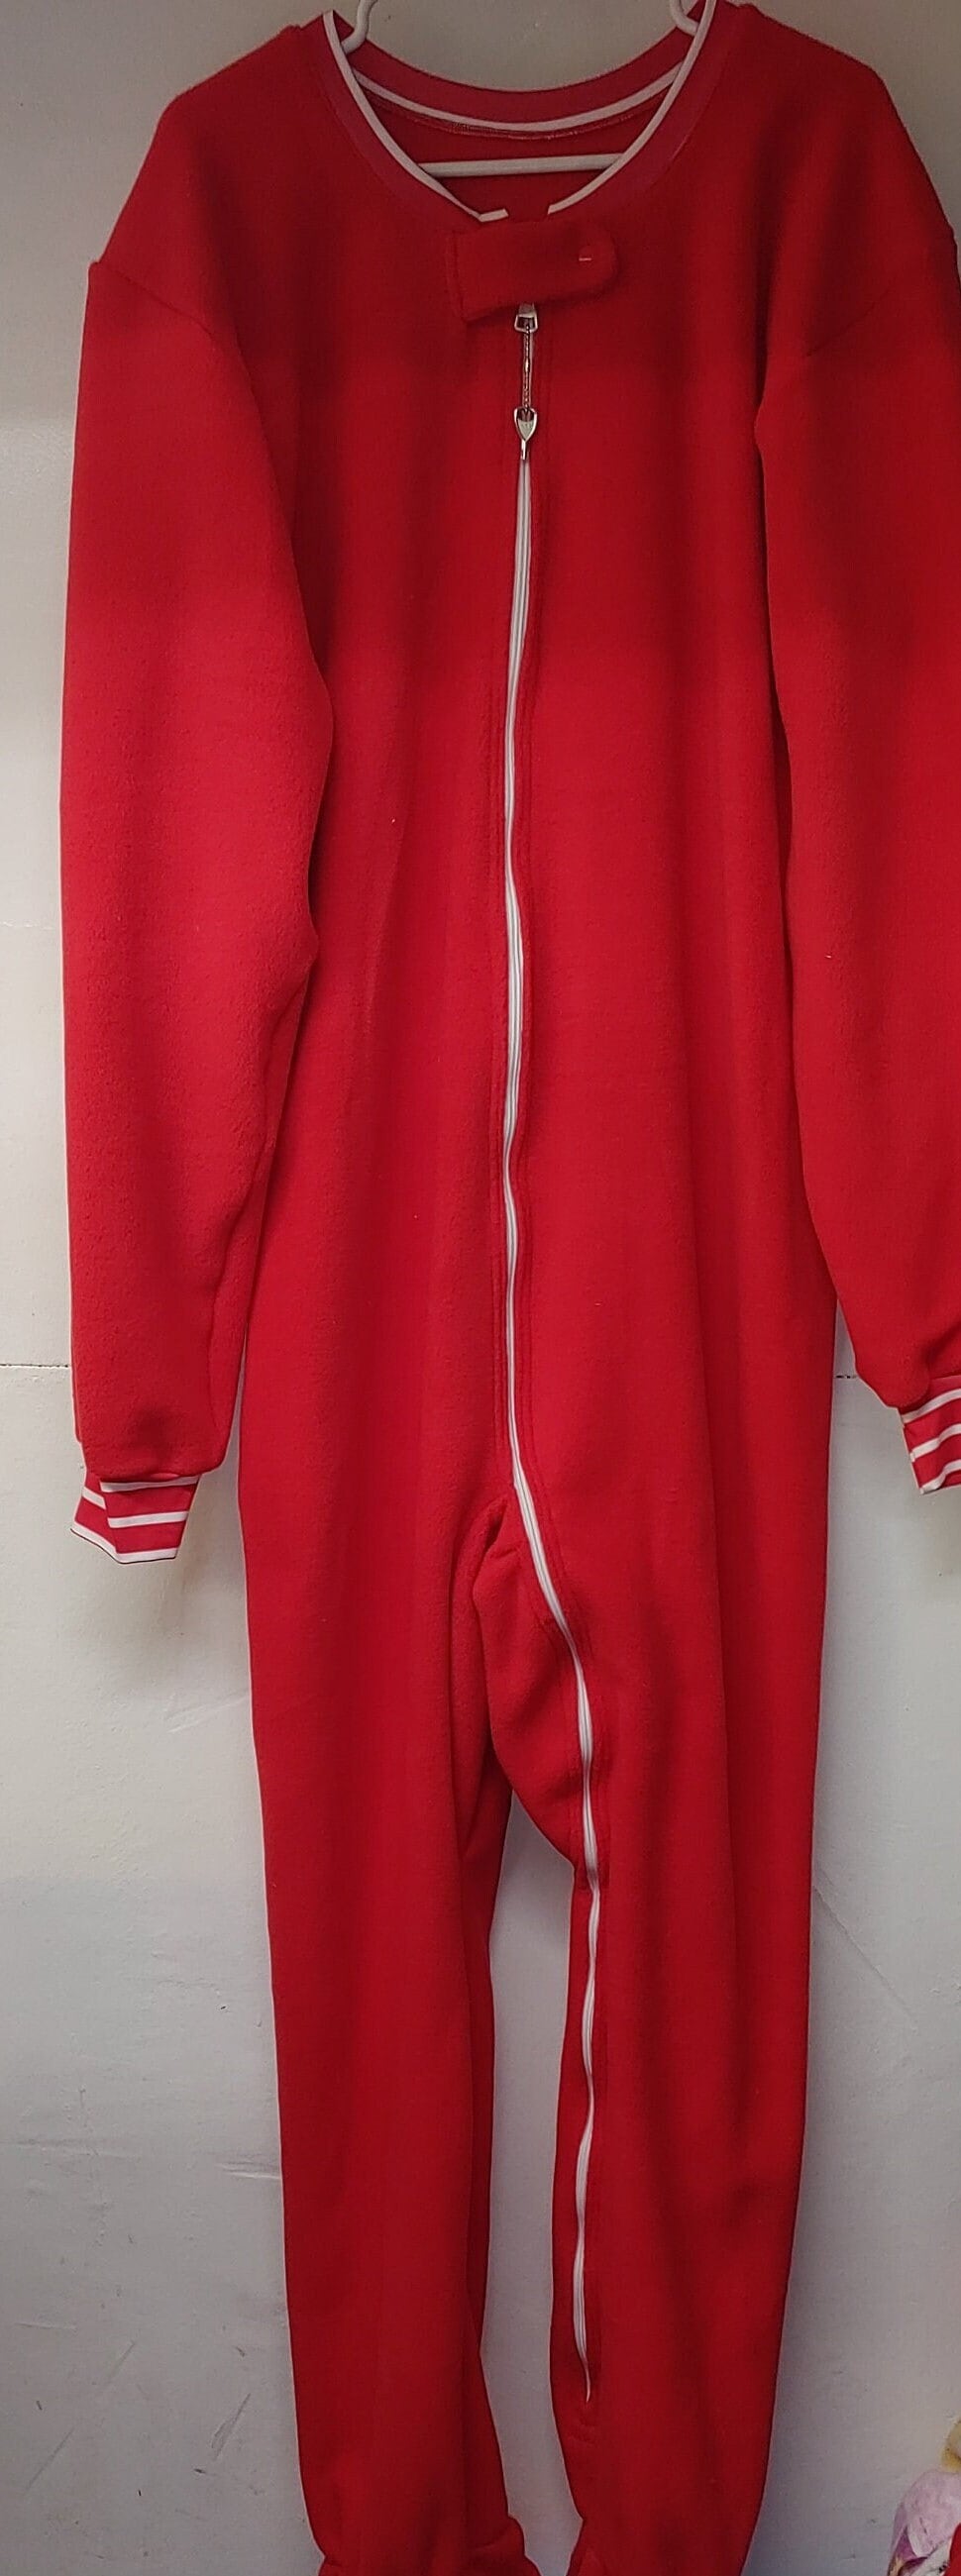 NEW PROMO Vintage YELLOW plush fleece open foot pajama featuring locking zipper and striped cuffs/collar